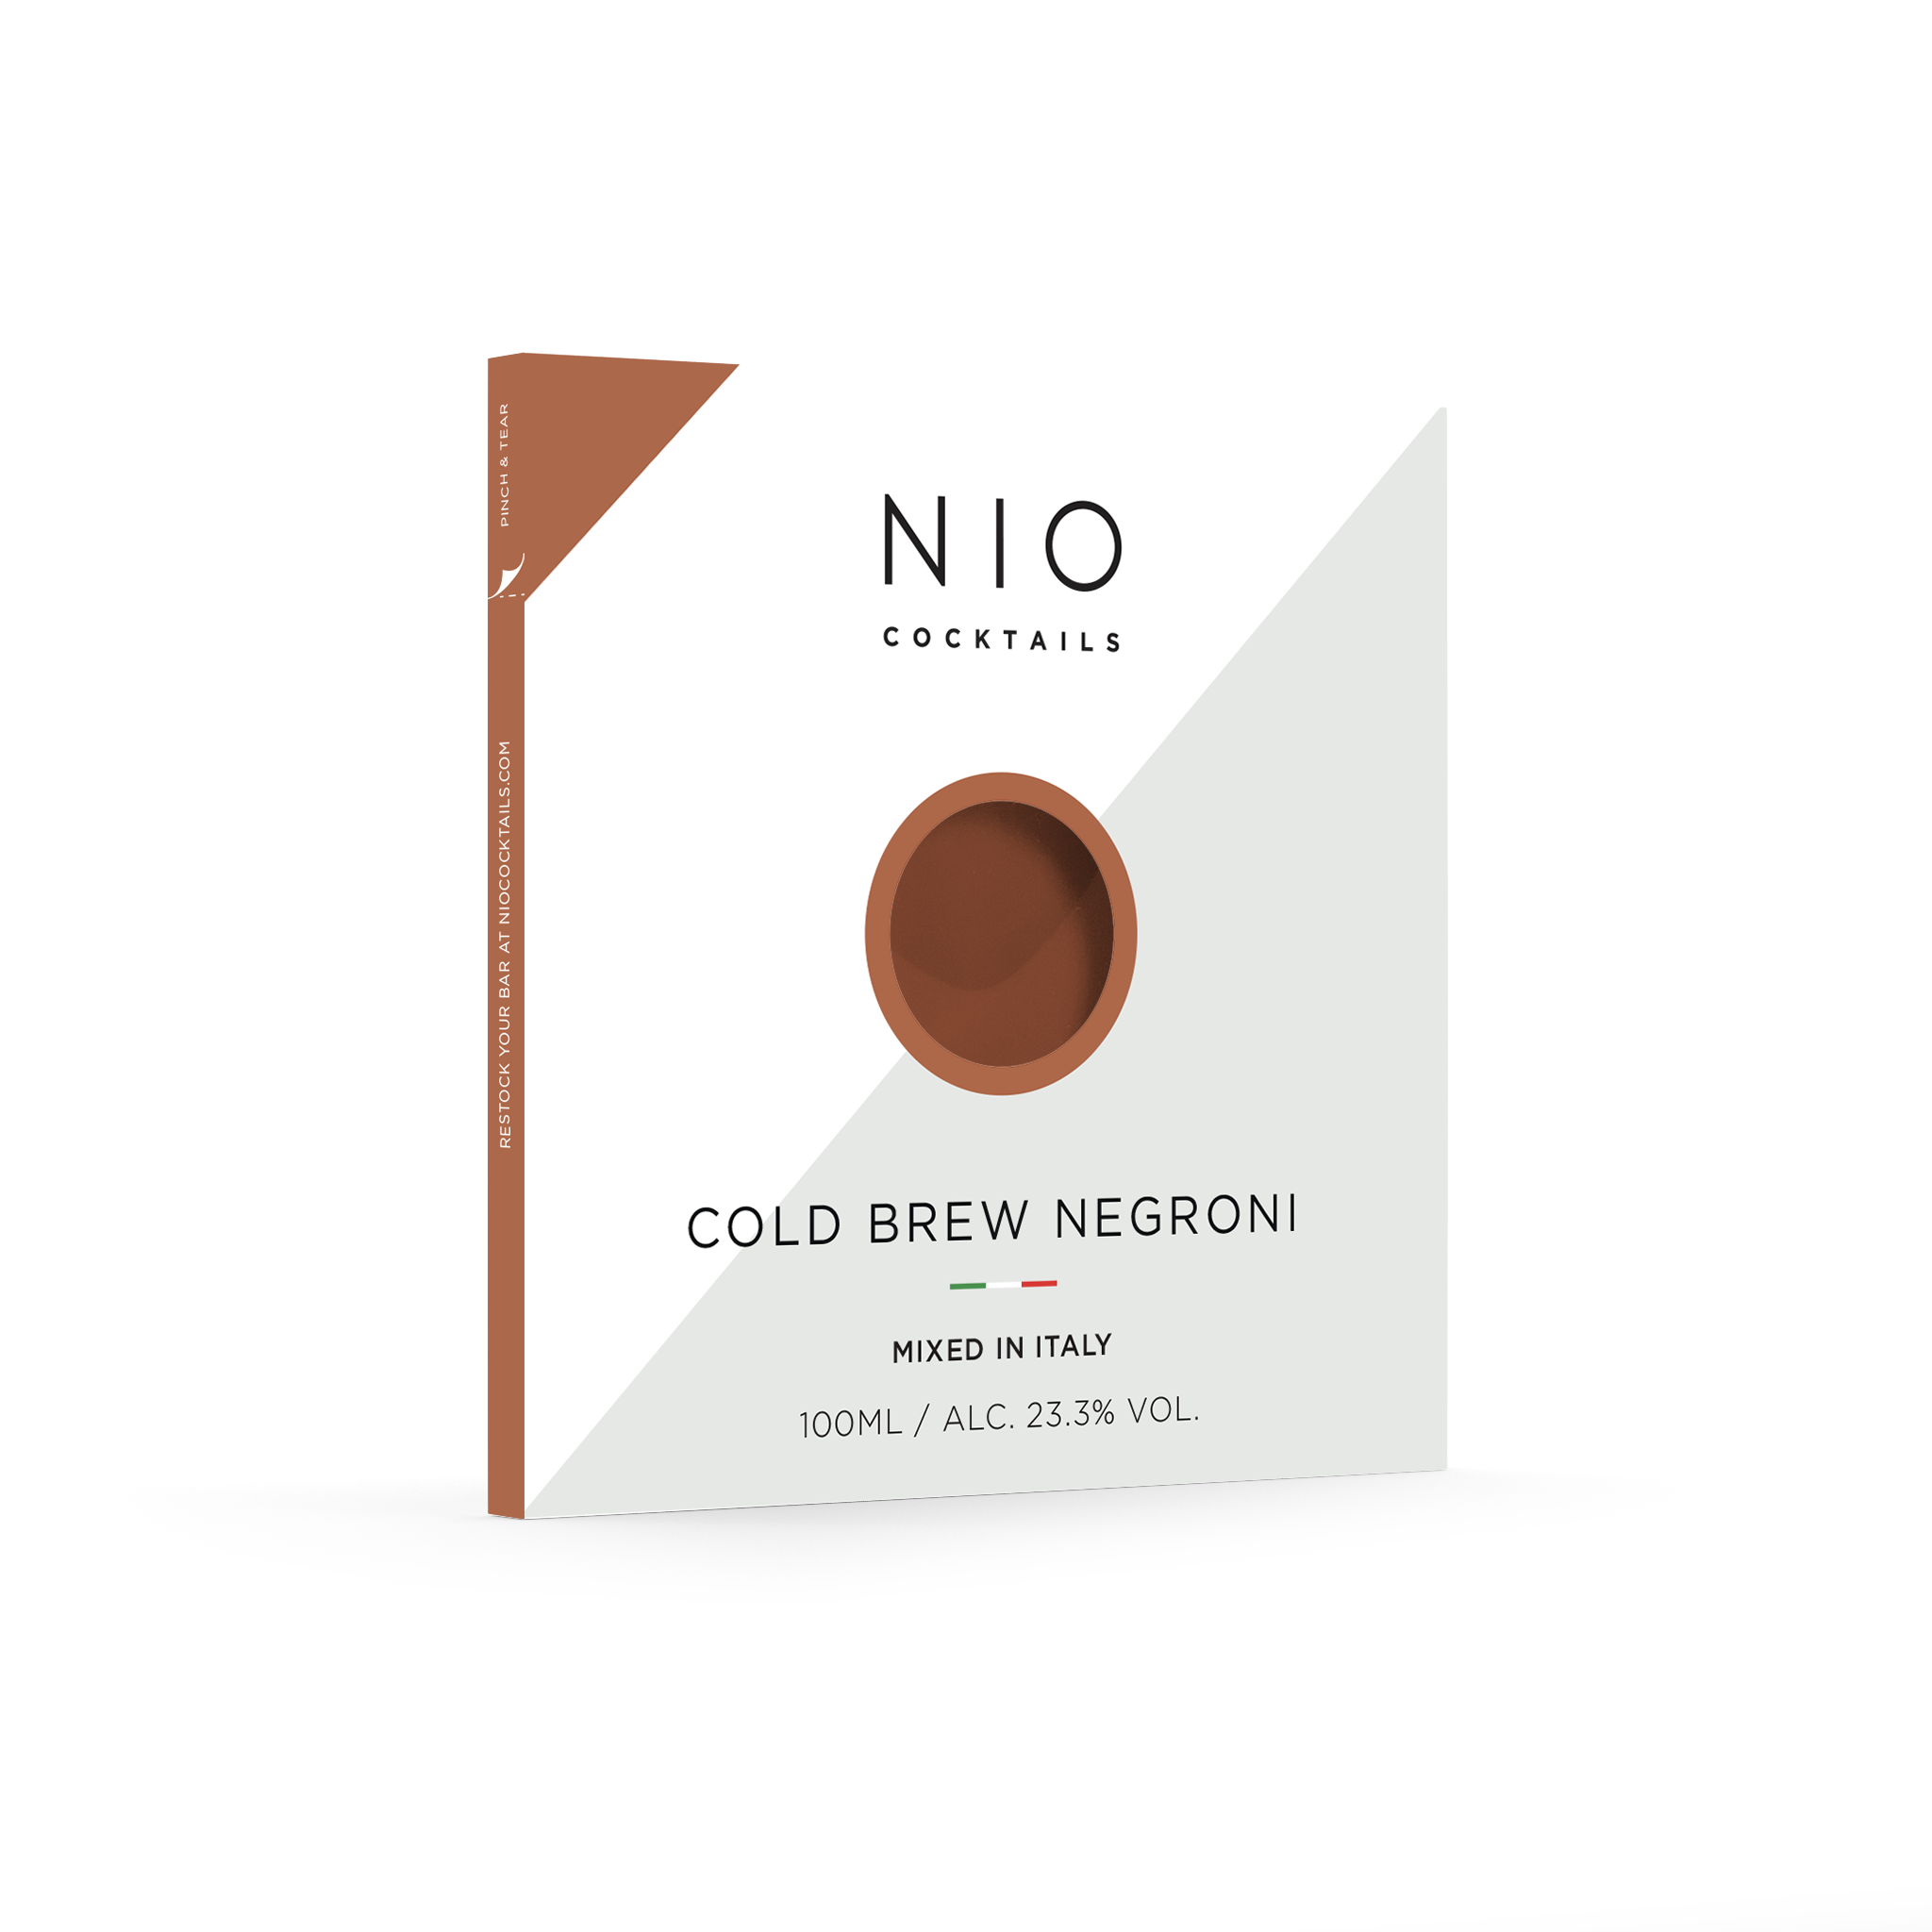 Cold Brew Negroni